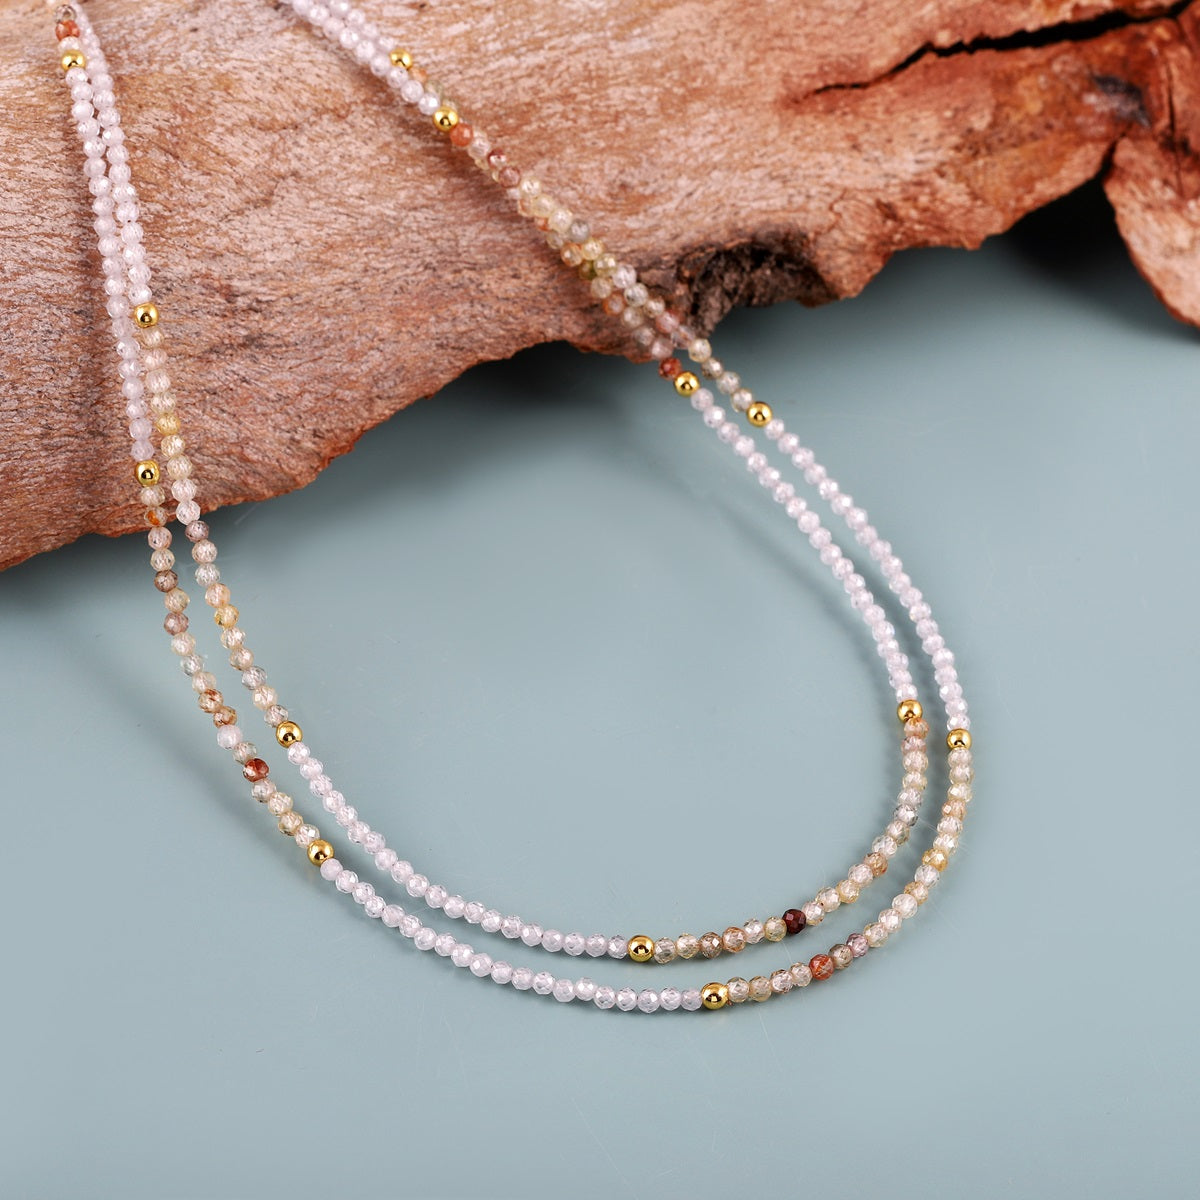 Luxurious Gold Hematite Gemstone Beads in Necklace